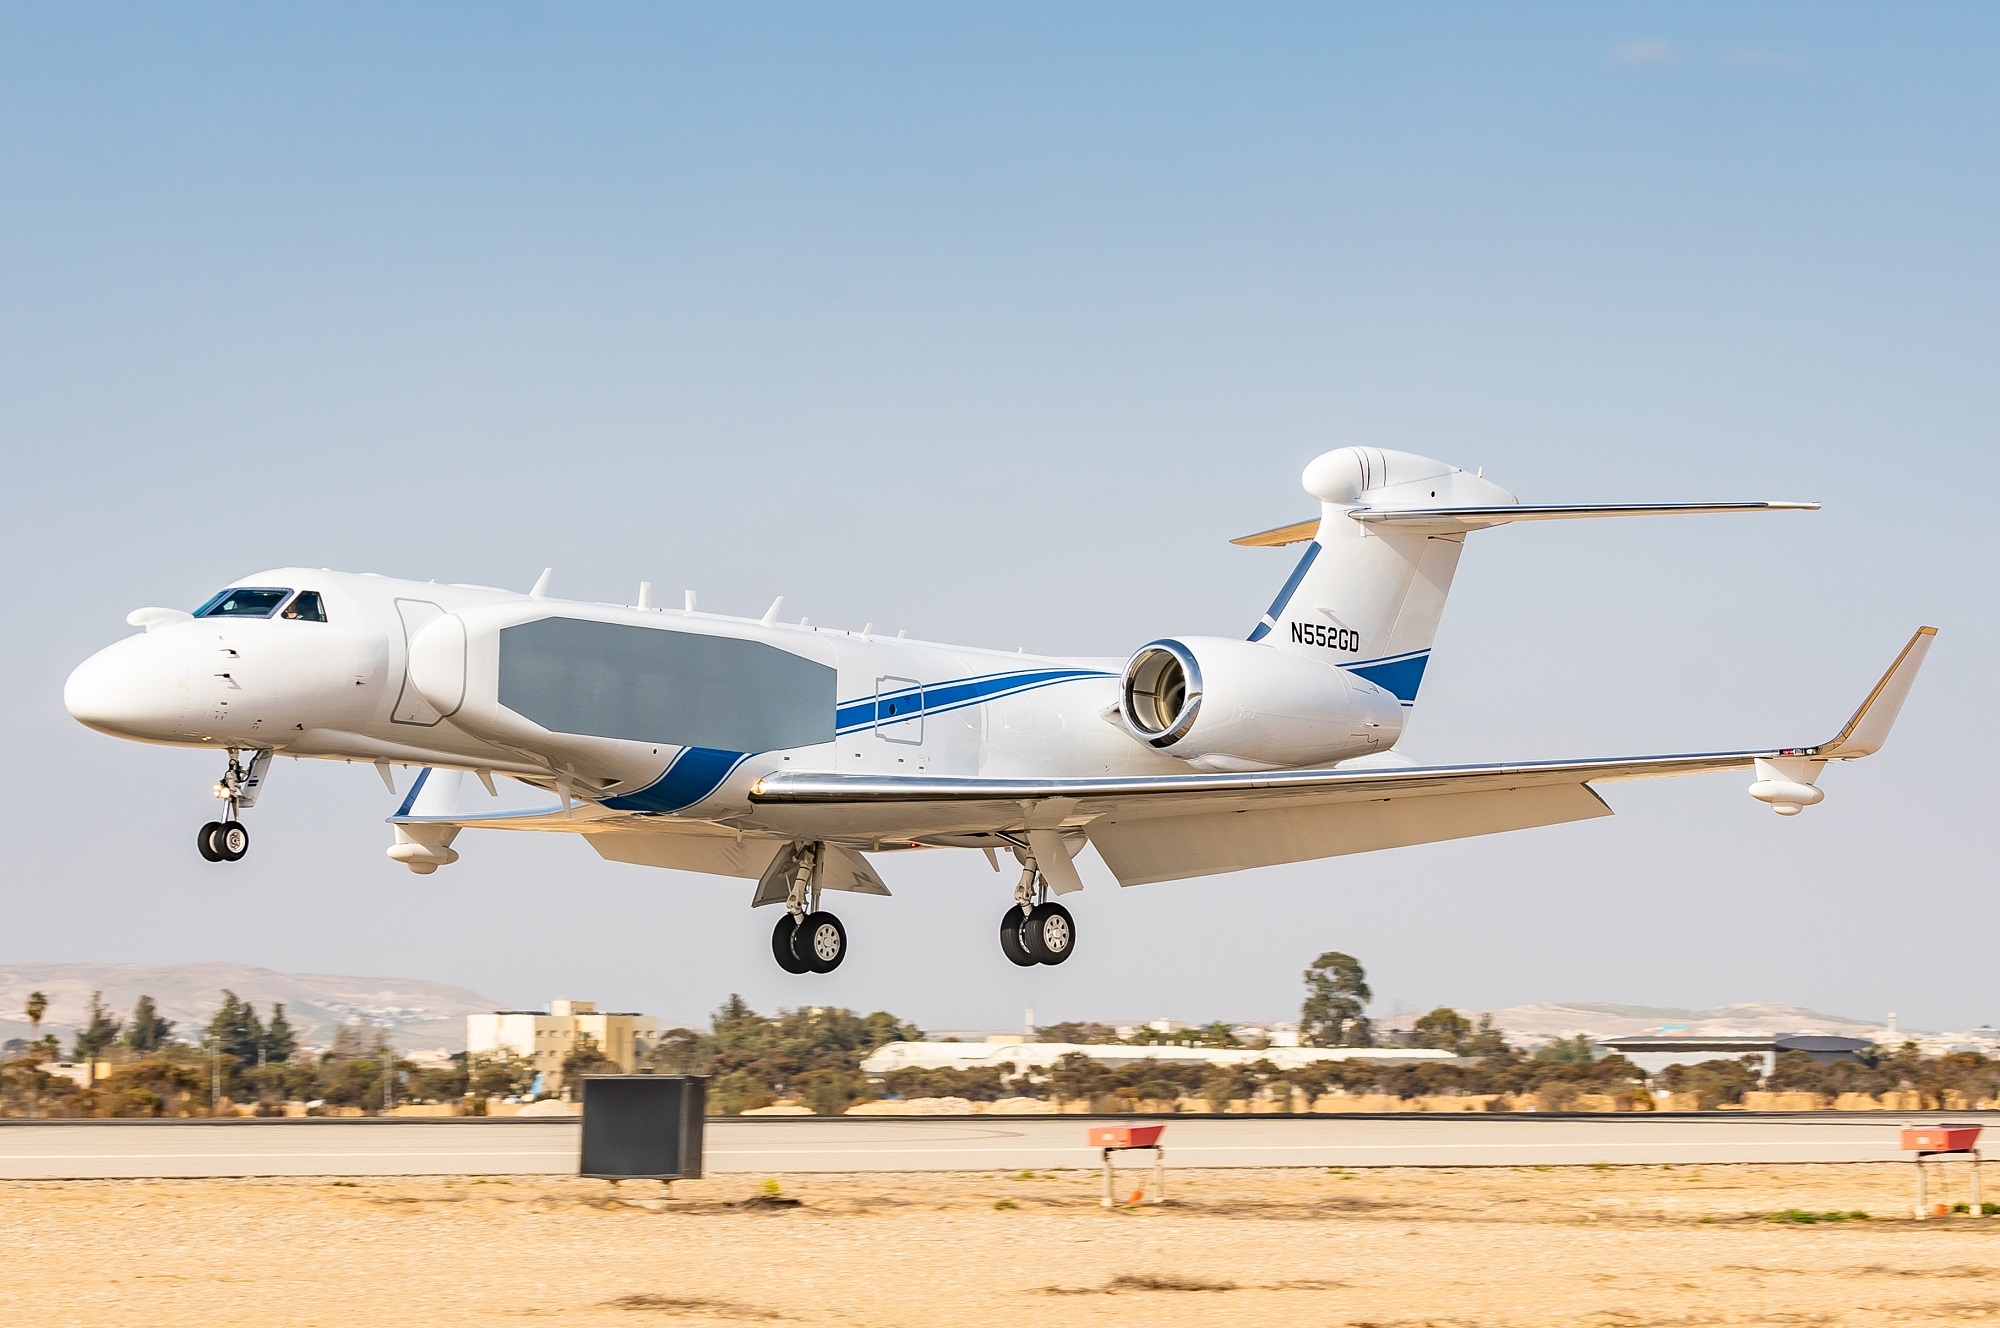 Israel Air Force Oron Intelligence-gathering Aircraft